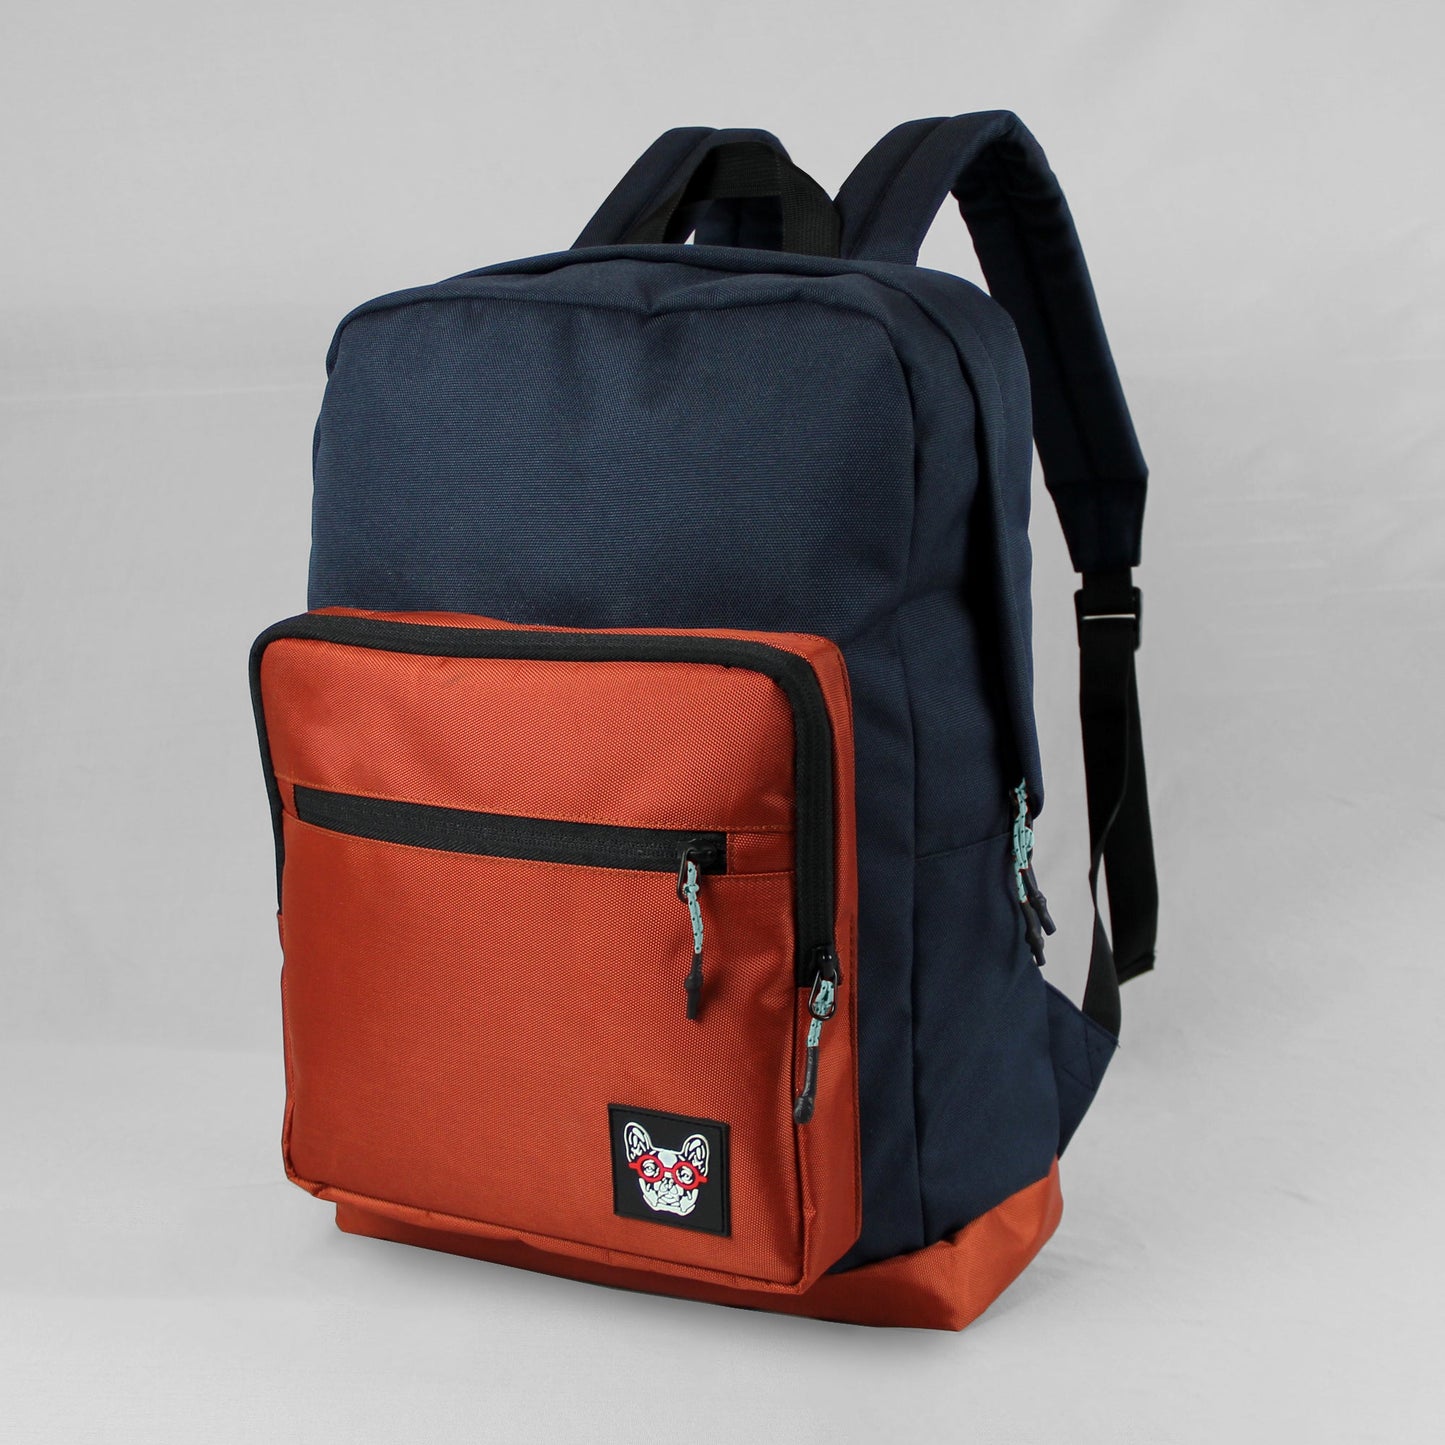 Buy ORANGEADE Unisex Small Backpack from MADBRAG